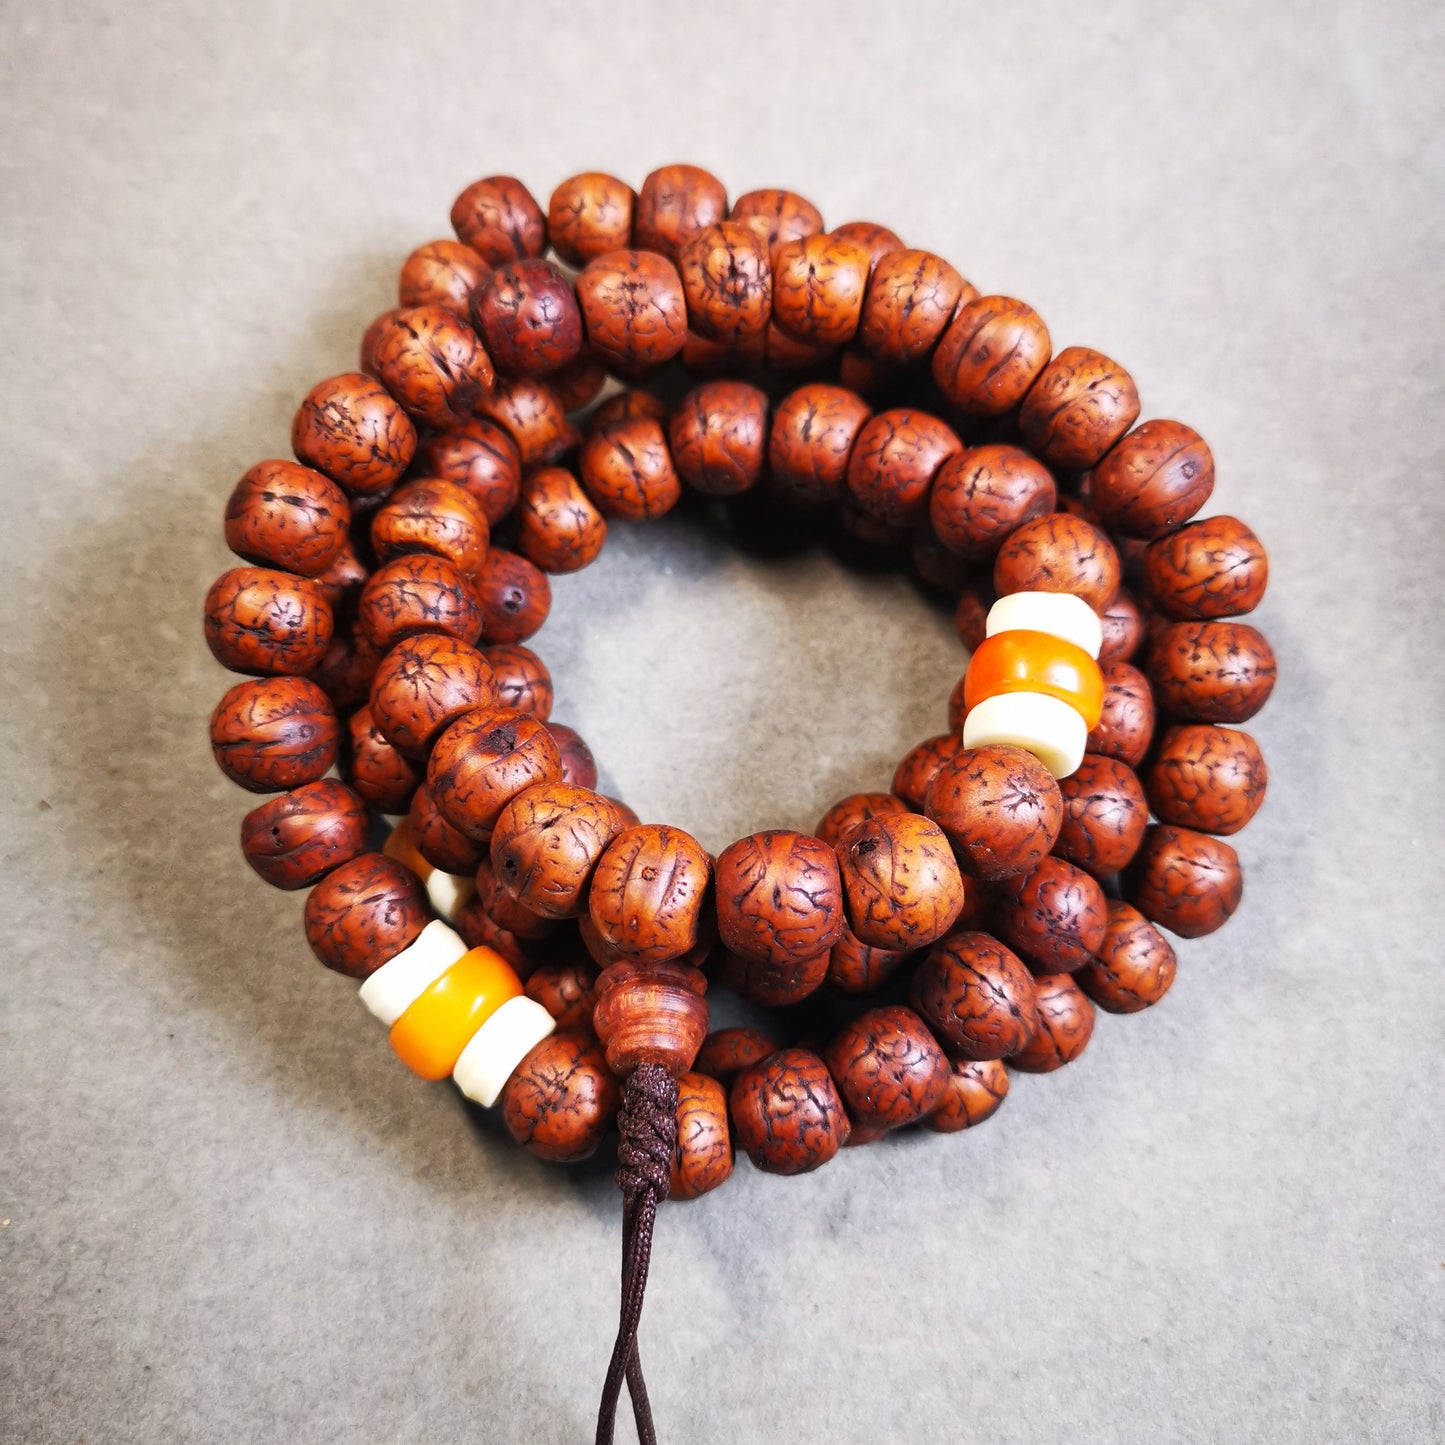 Gandhanra Antique Big Bodhi Beads Mala Necklace,49 inches 108 Prayer Bead for Meditation